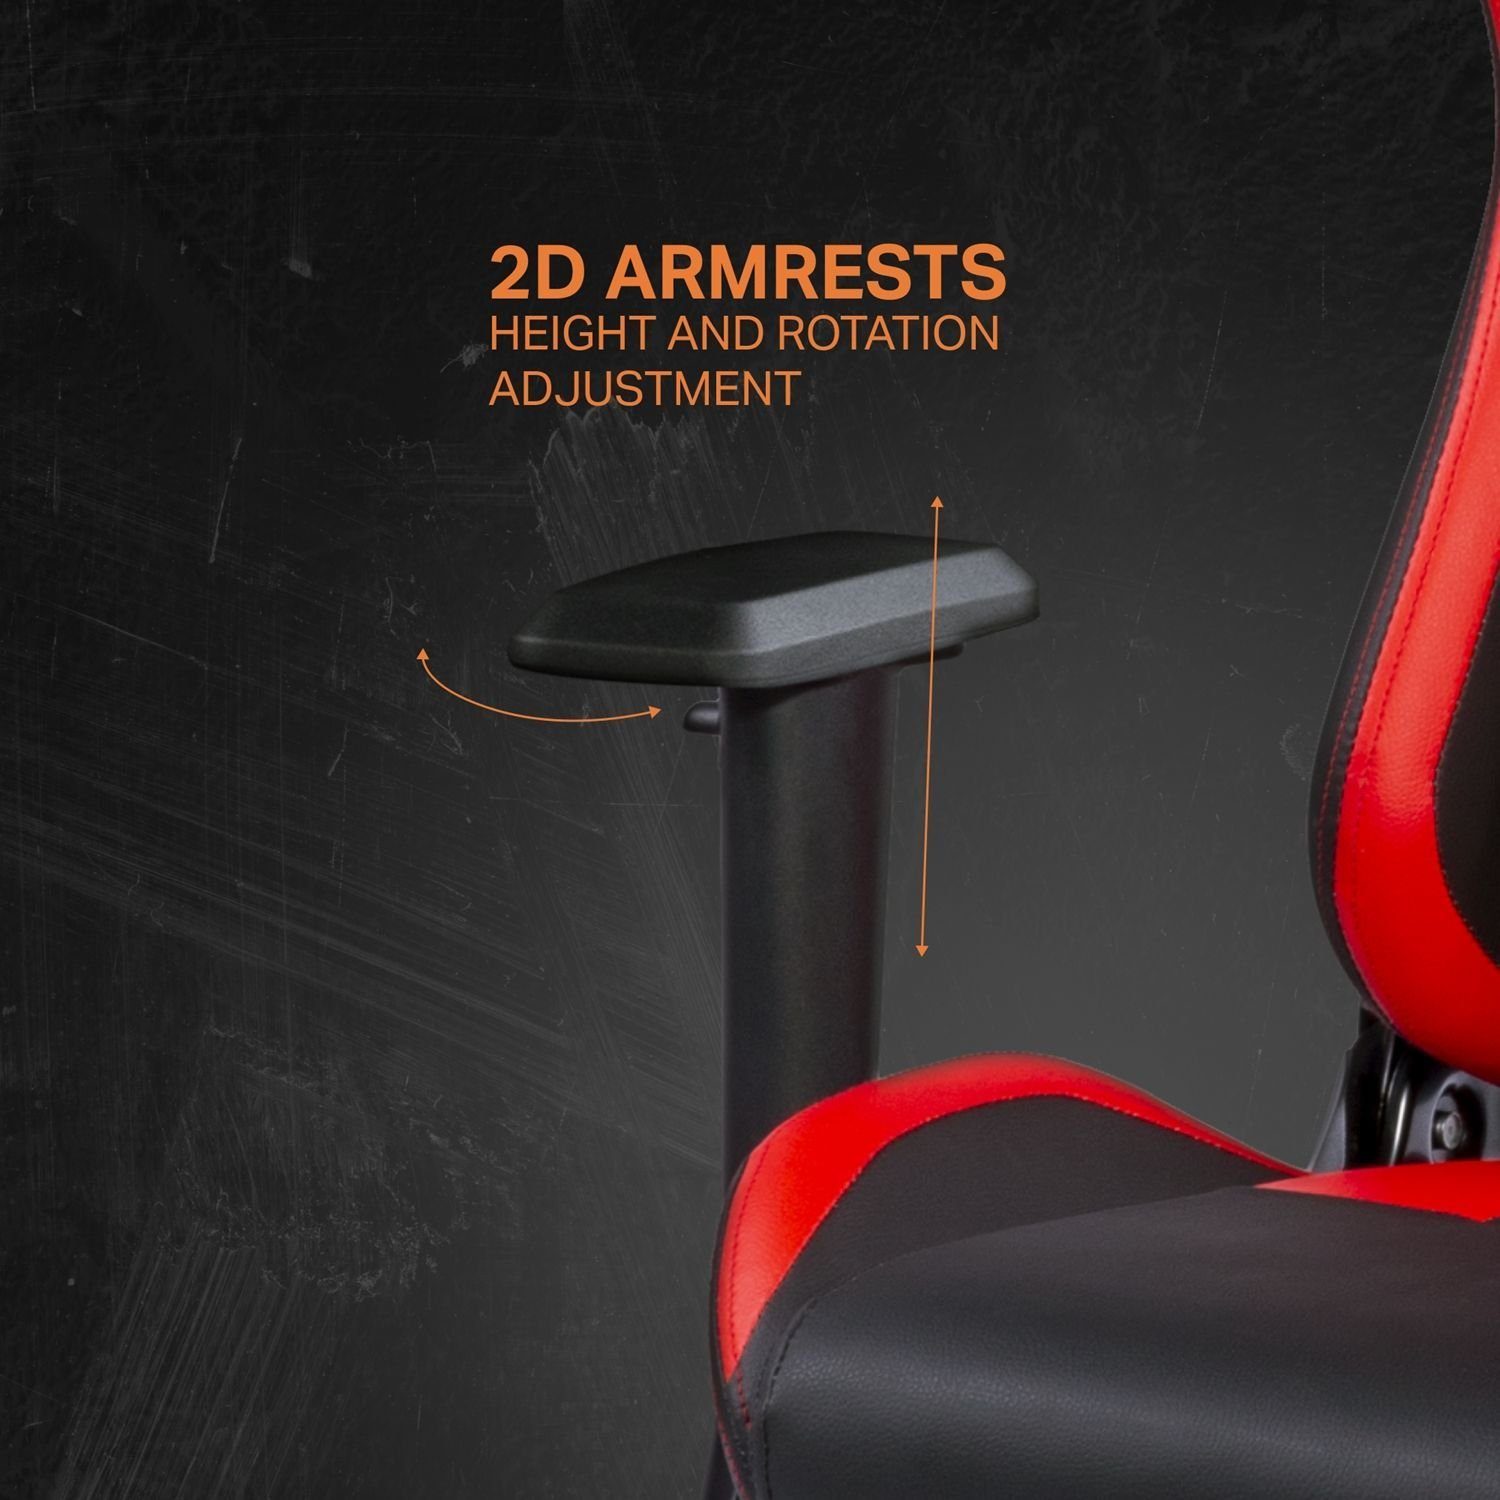 Jumbo Rückenlehne, Herstellergarantie Kissen 5 inkl. Gamer Set), hohe Gaming-Stuhl Stuhl 110kg Gaming DELTACO schwarz/rot (kein extra Stuhl groß, Jahre